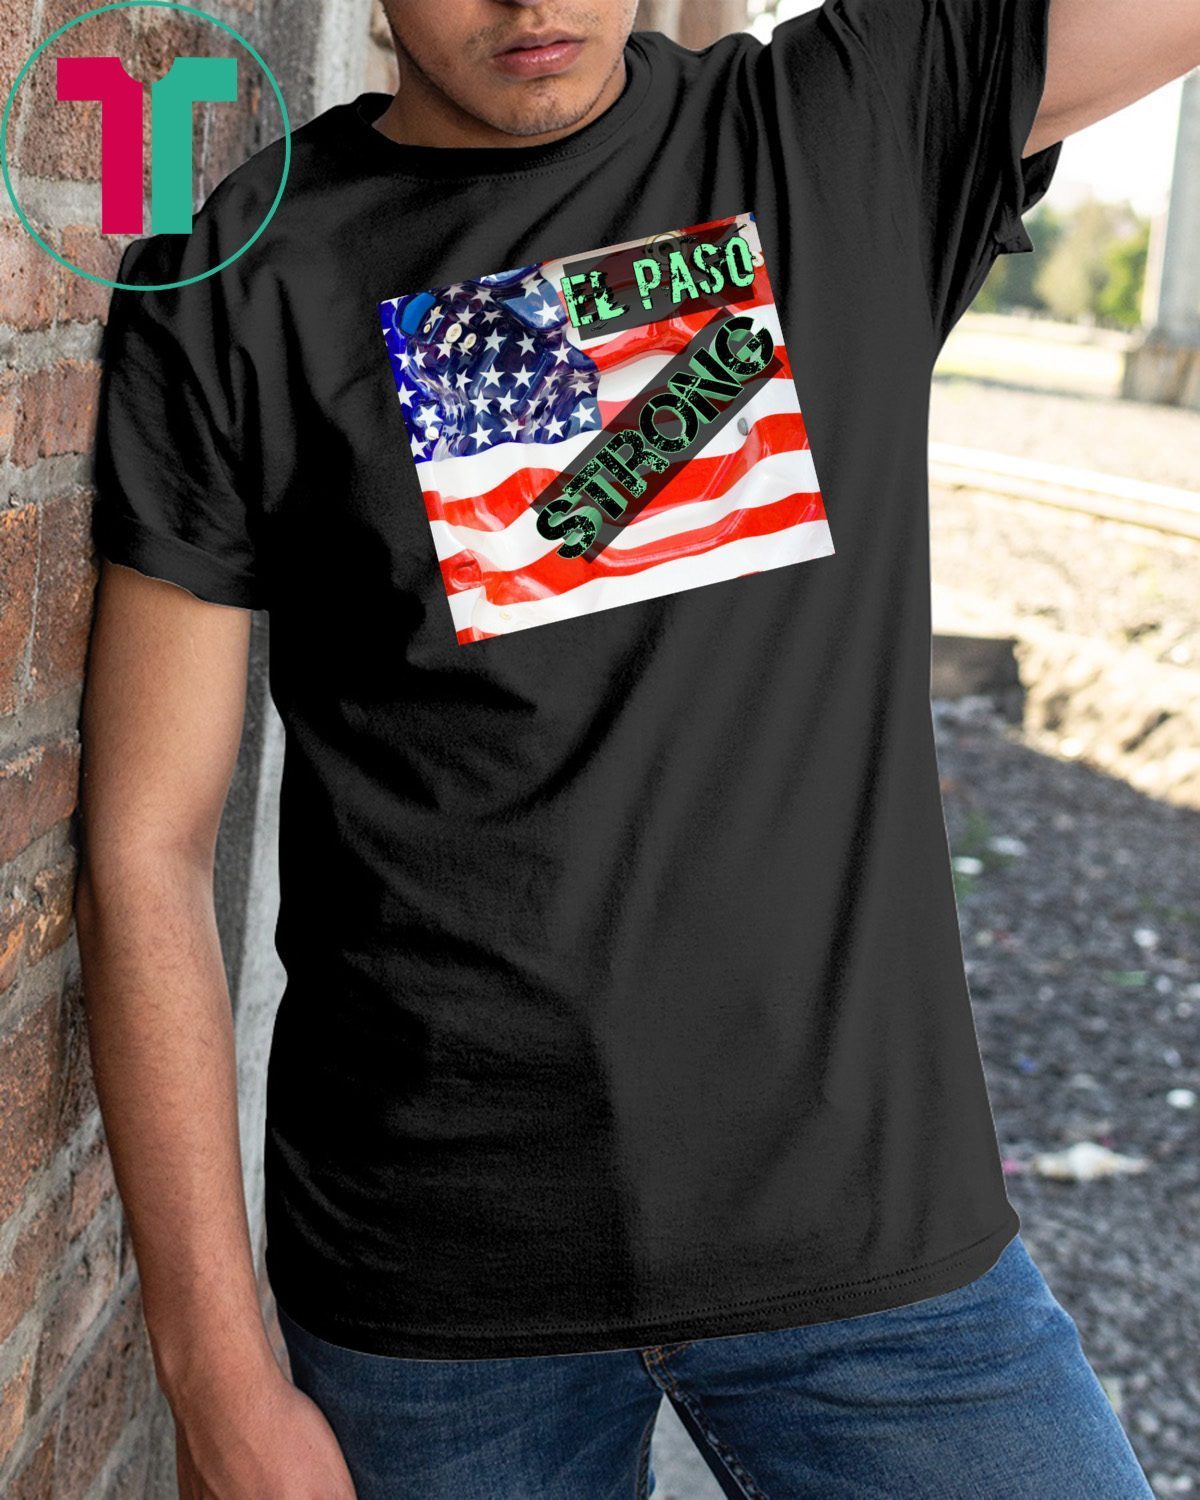 El Paso strong T-shirt #ElPasoStrong tshirt USA flag - OrderQuilt.com